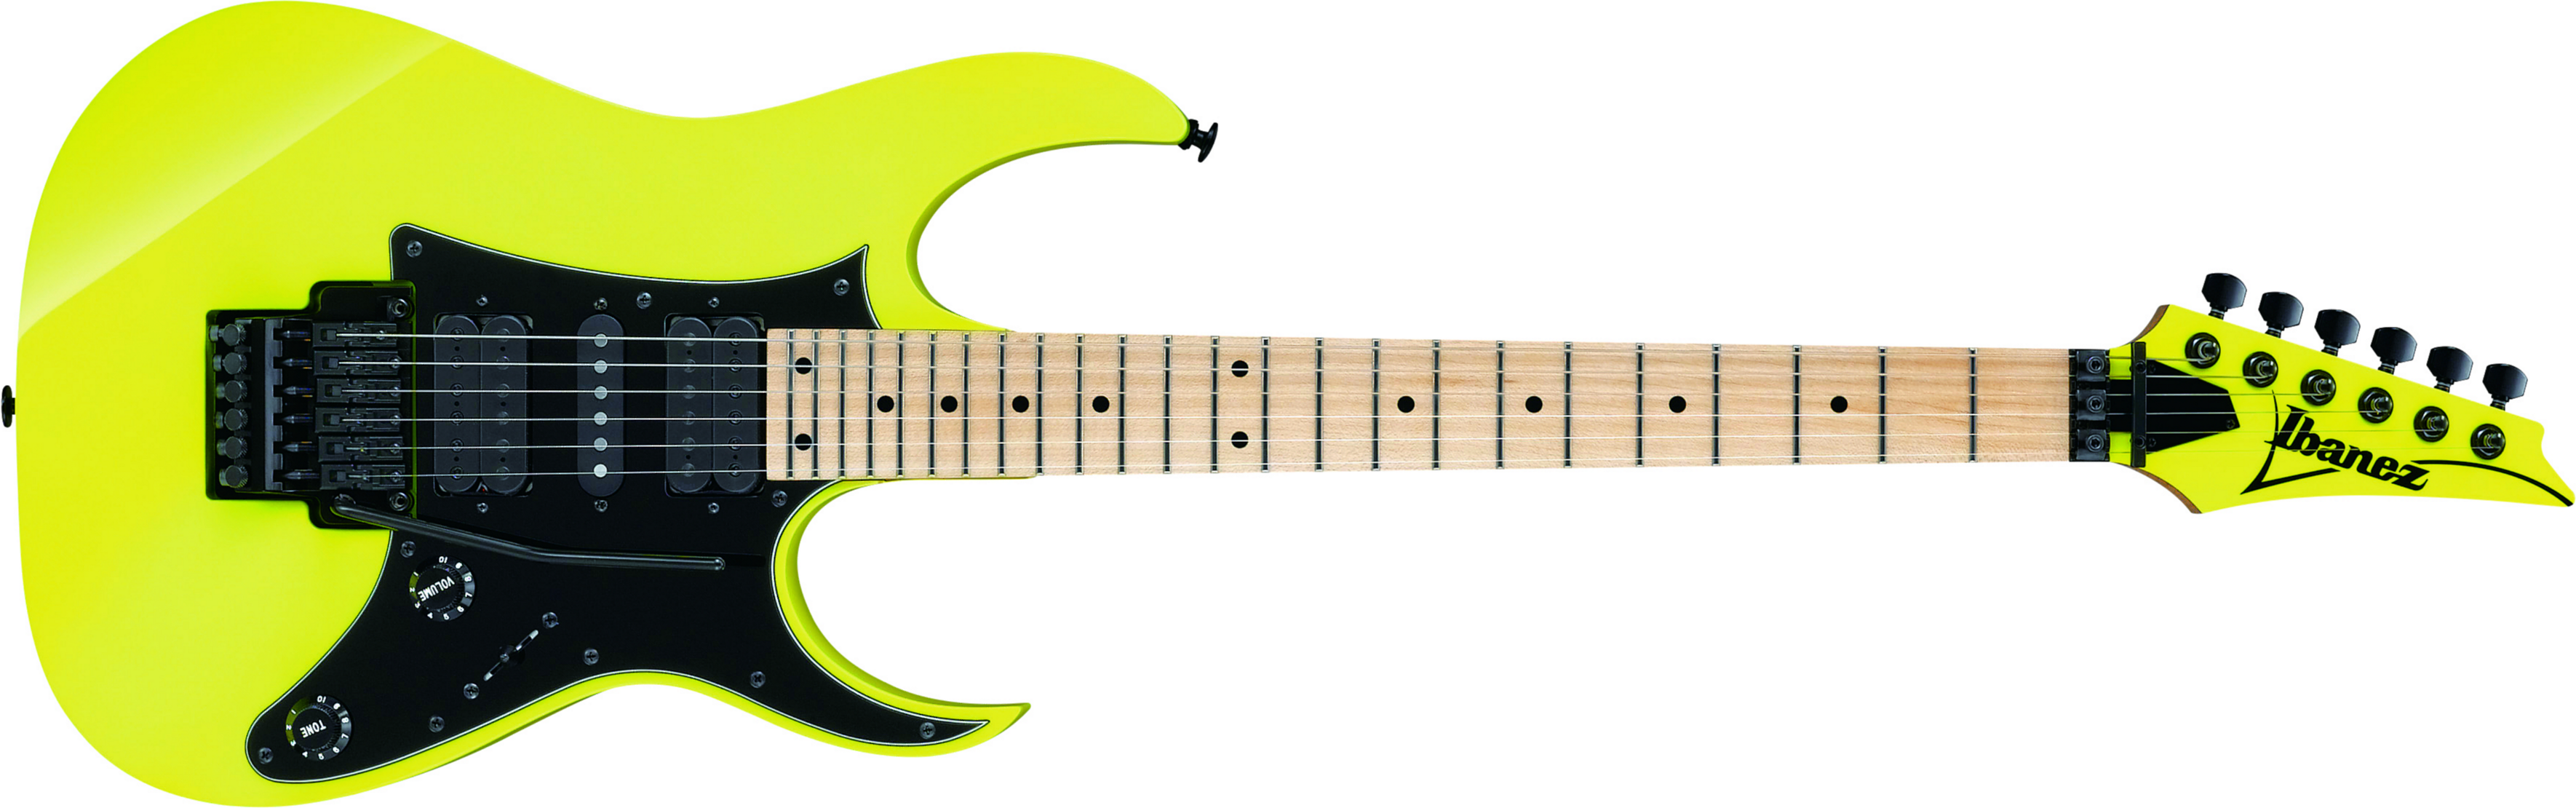 Ibanez Rg550 Dy Genesis Japon Hsh Fr Mn - Desert Sun Yellow - Elektrische gitaar in Str-vorm - Main picture